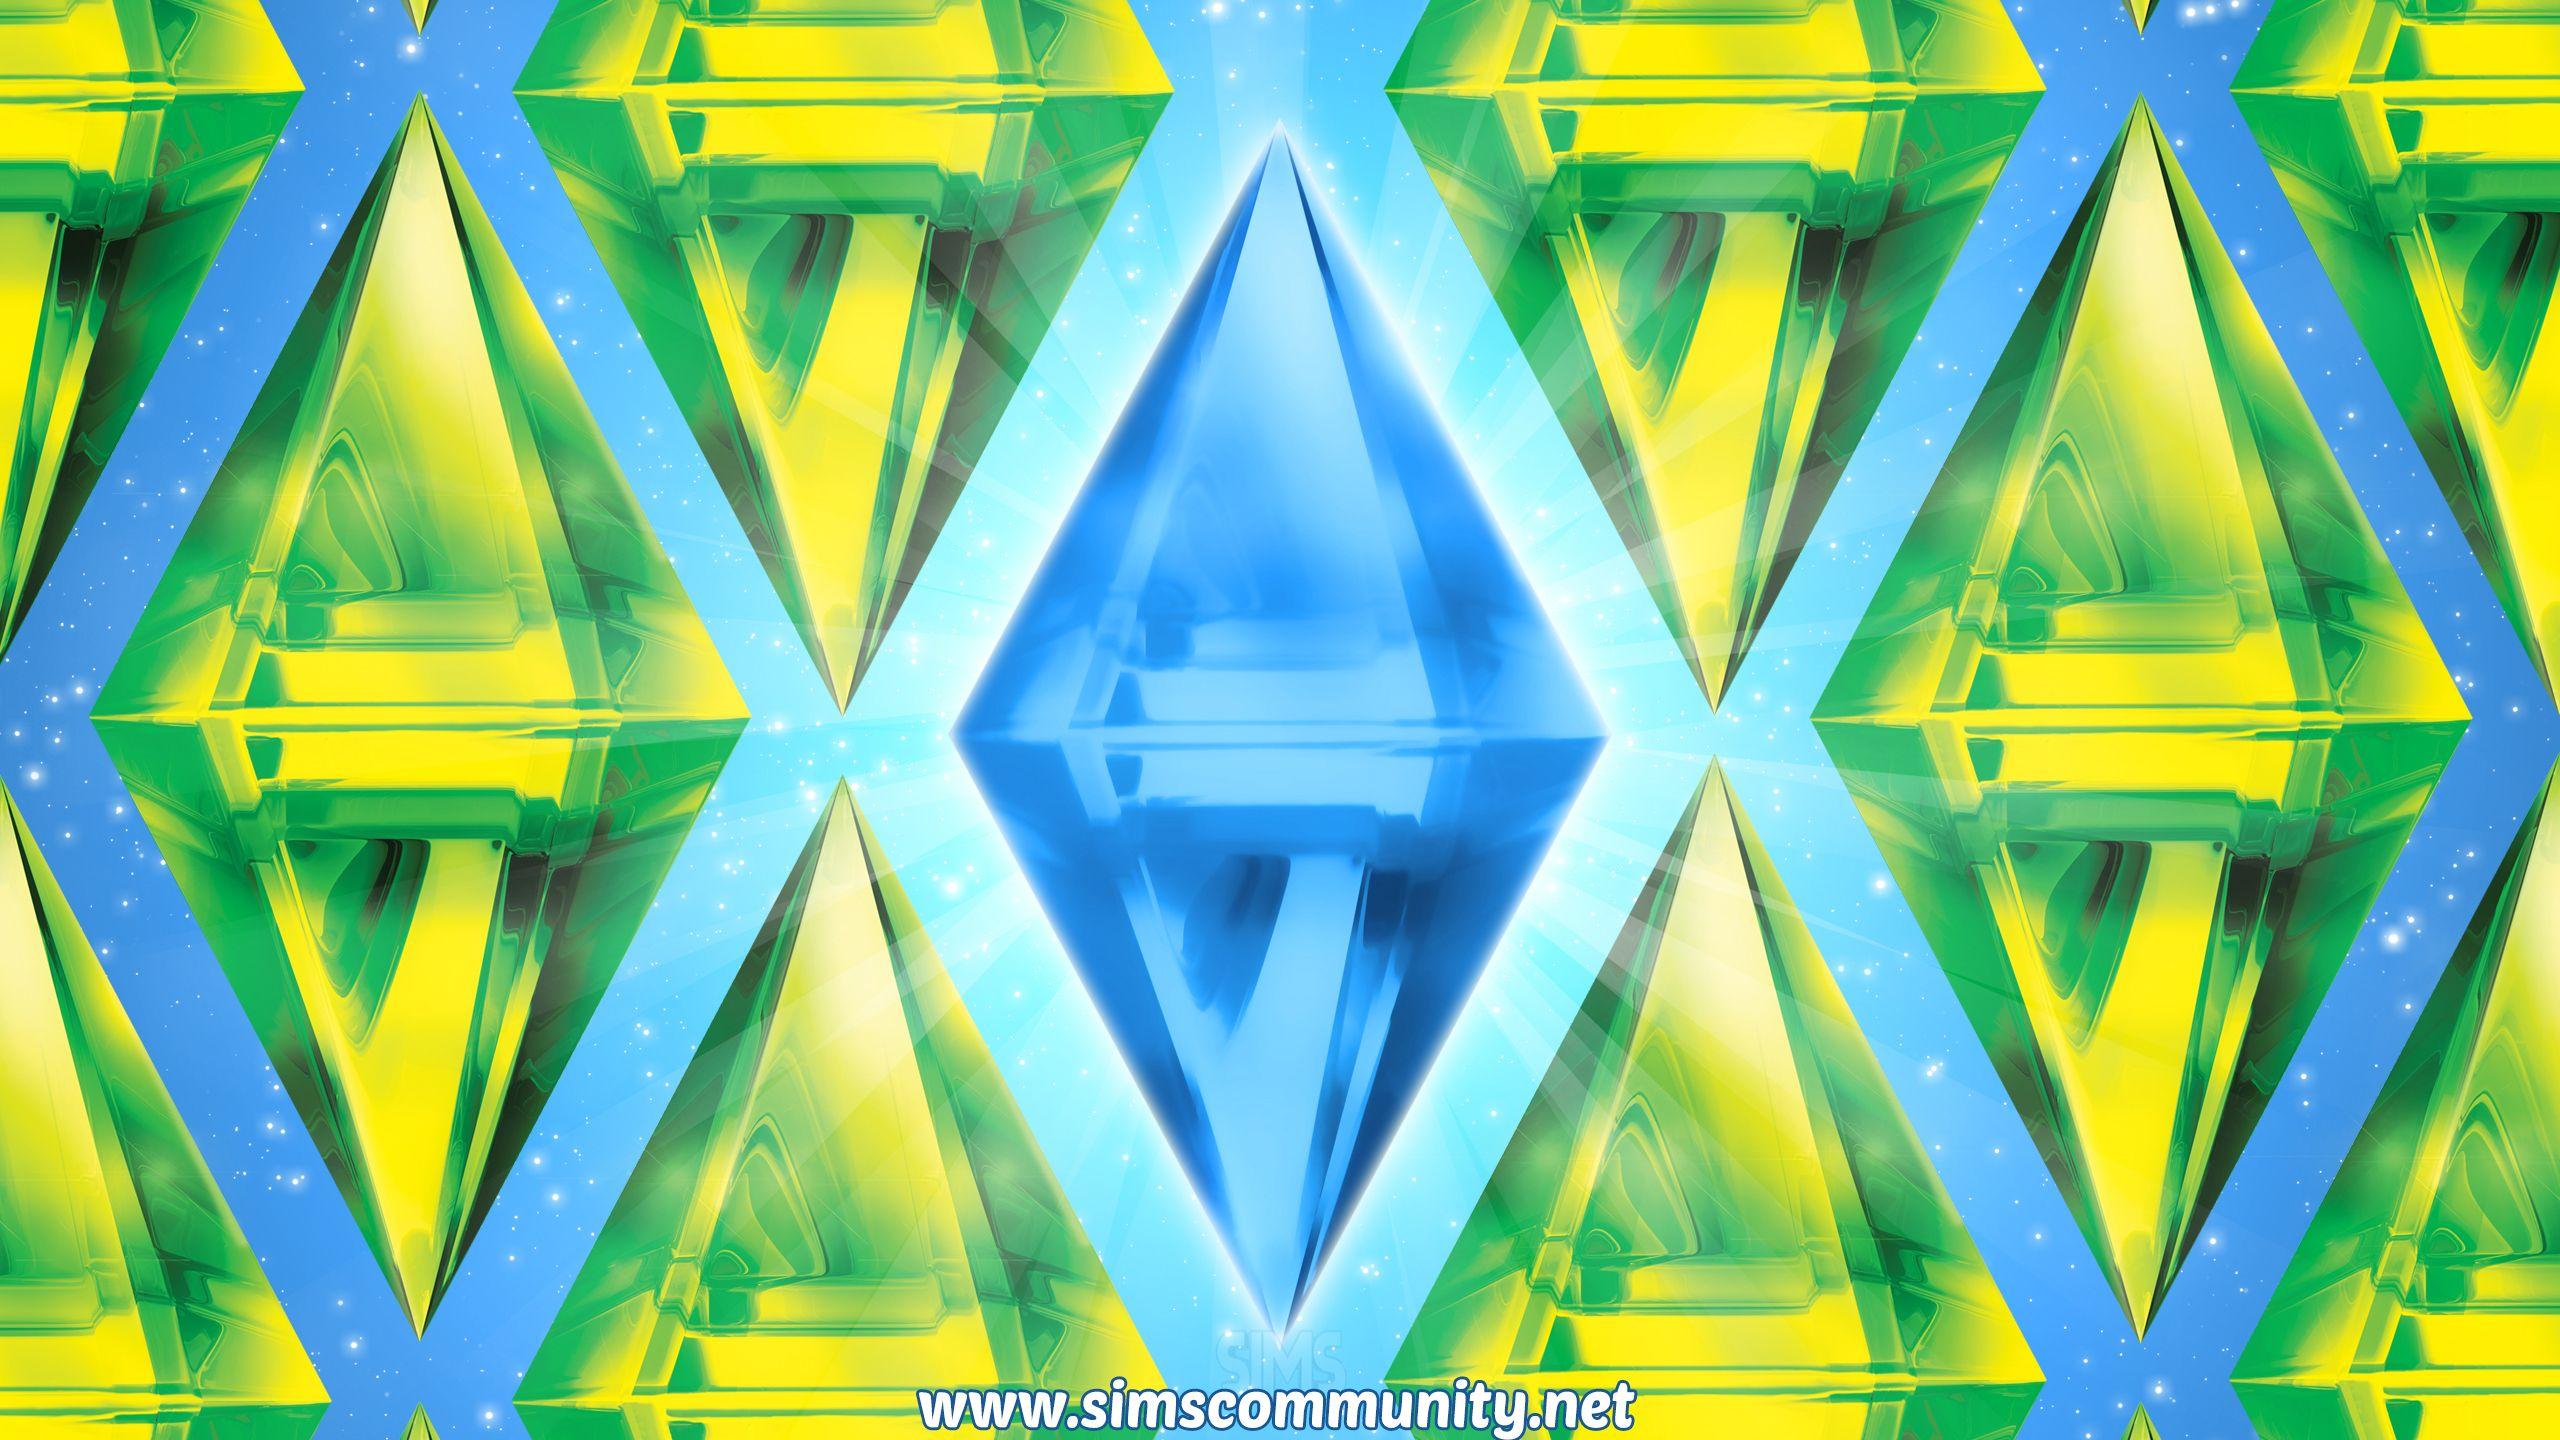 Sims 4 Wallpaper, Fine HDQ Sims 4 Image. Stunning 4K Ultra HD